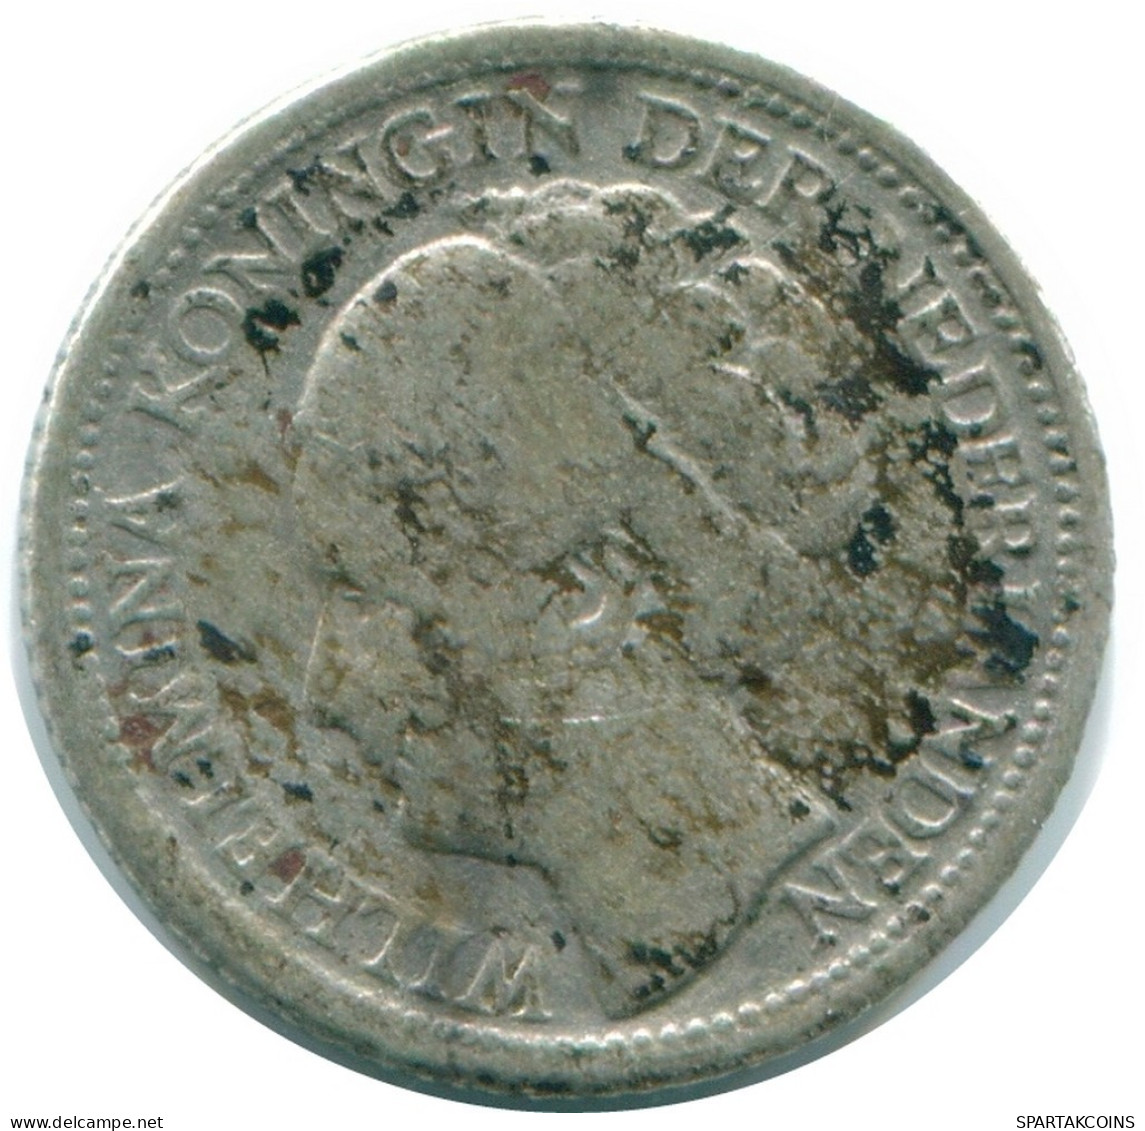 1/10 GULDEN 1944 CURACAO Netherlands SILVER Colonial Coin #NL11815.3.U.A - Curacao